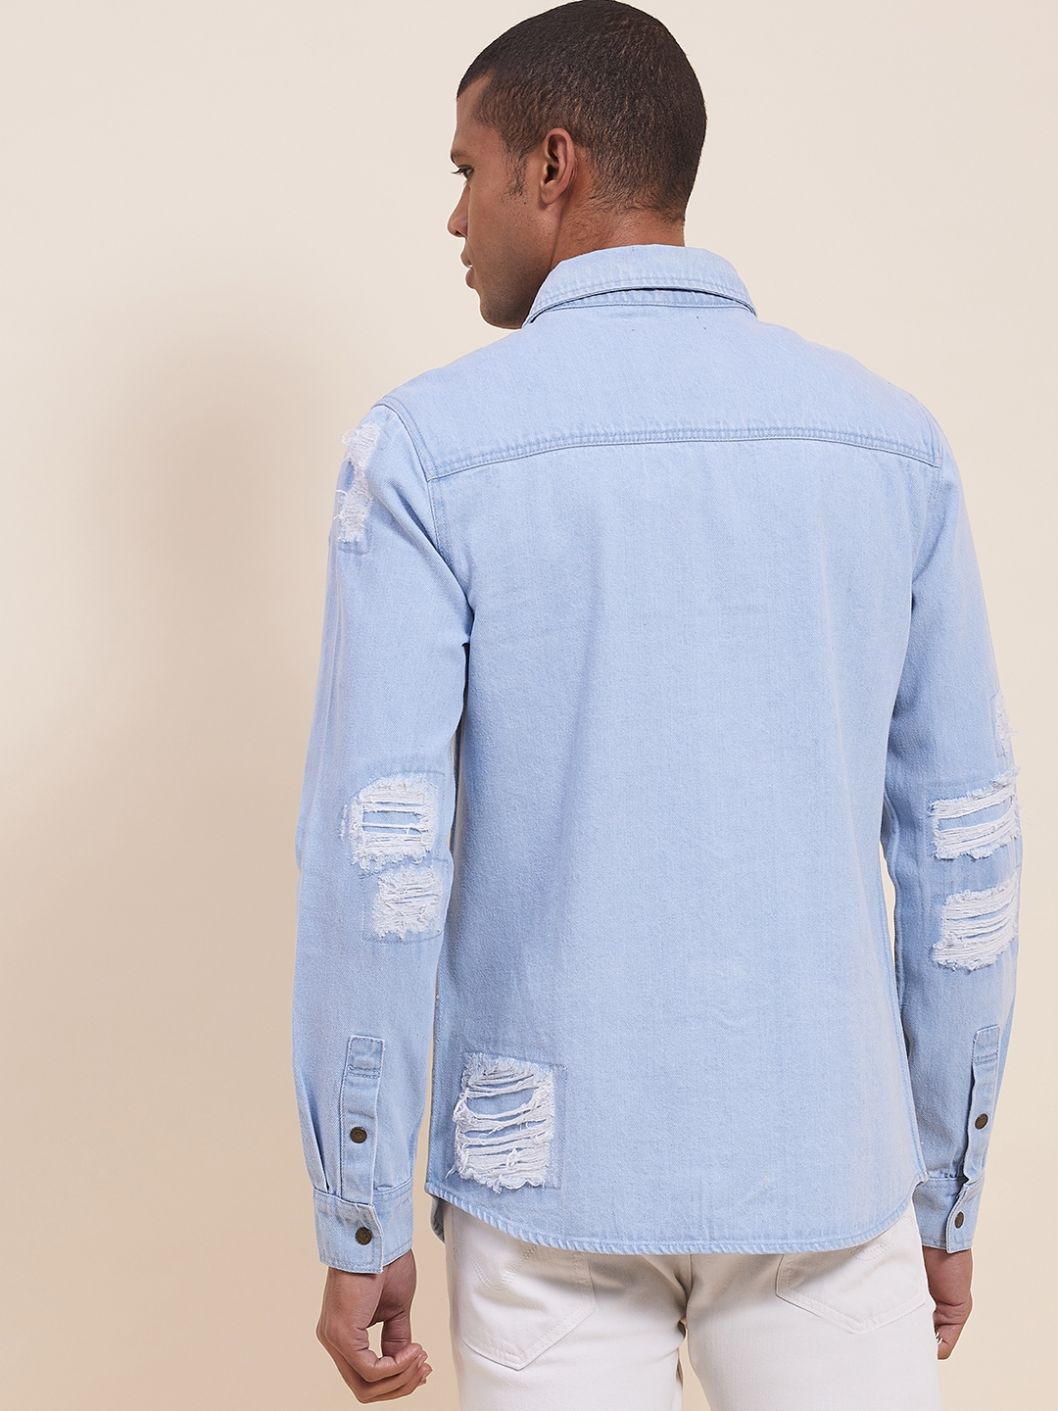 H&M Distressed Denim Shirt Western Style Size EU 36 | eBay